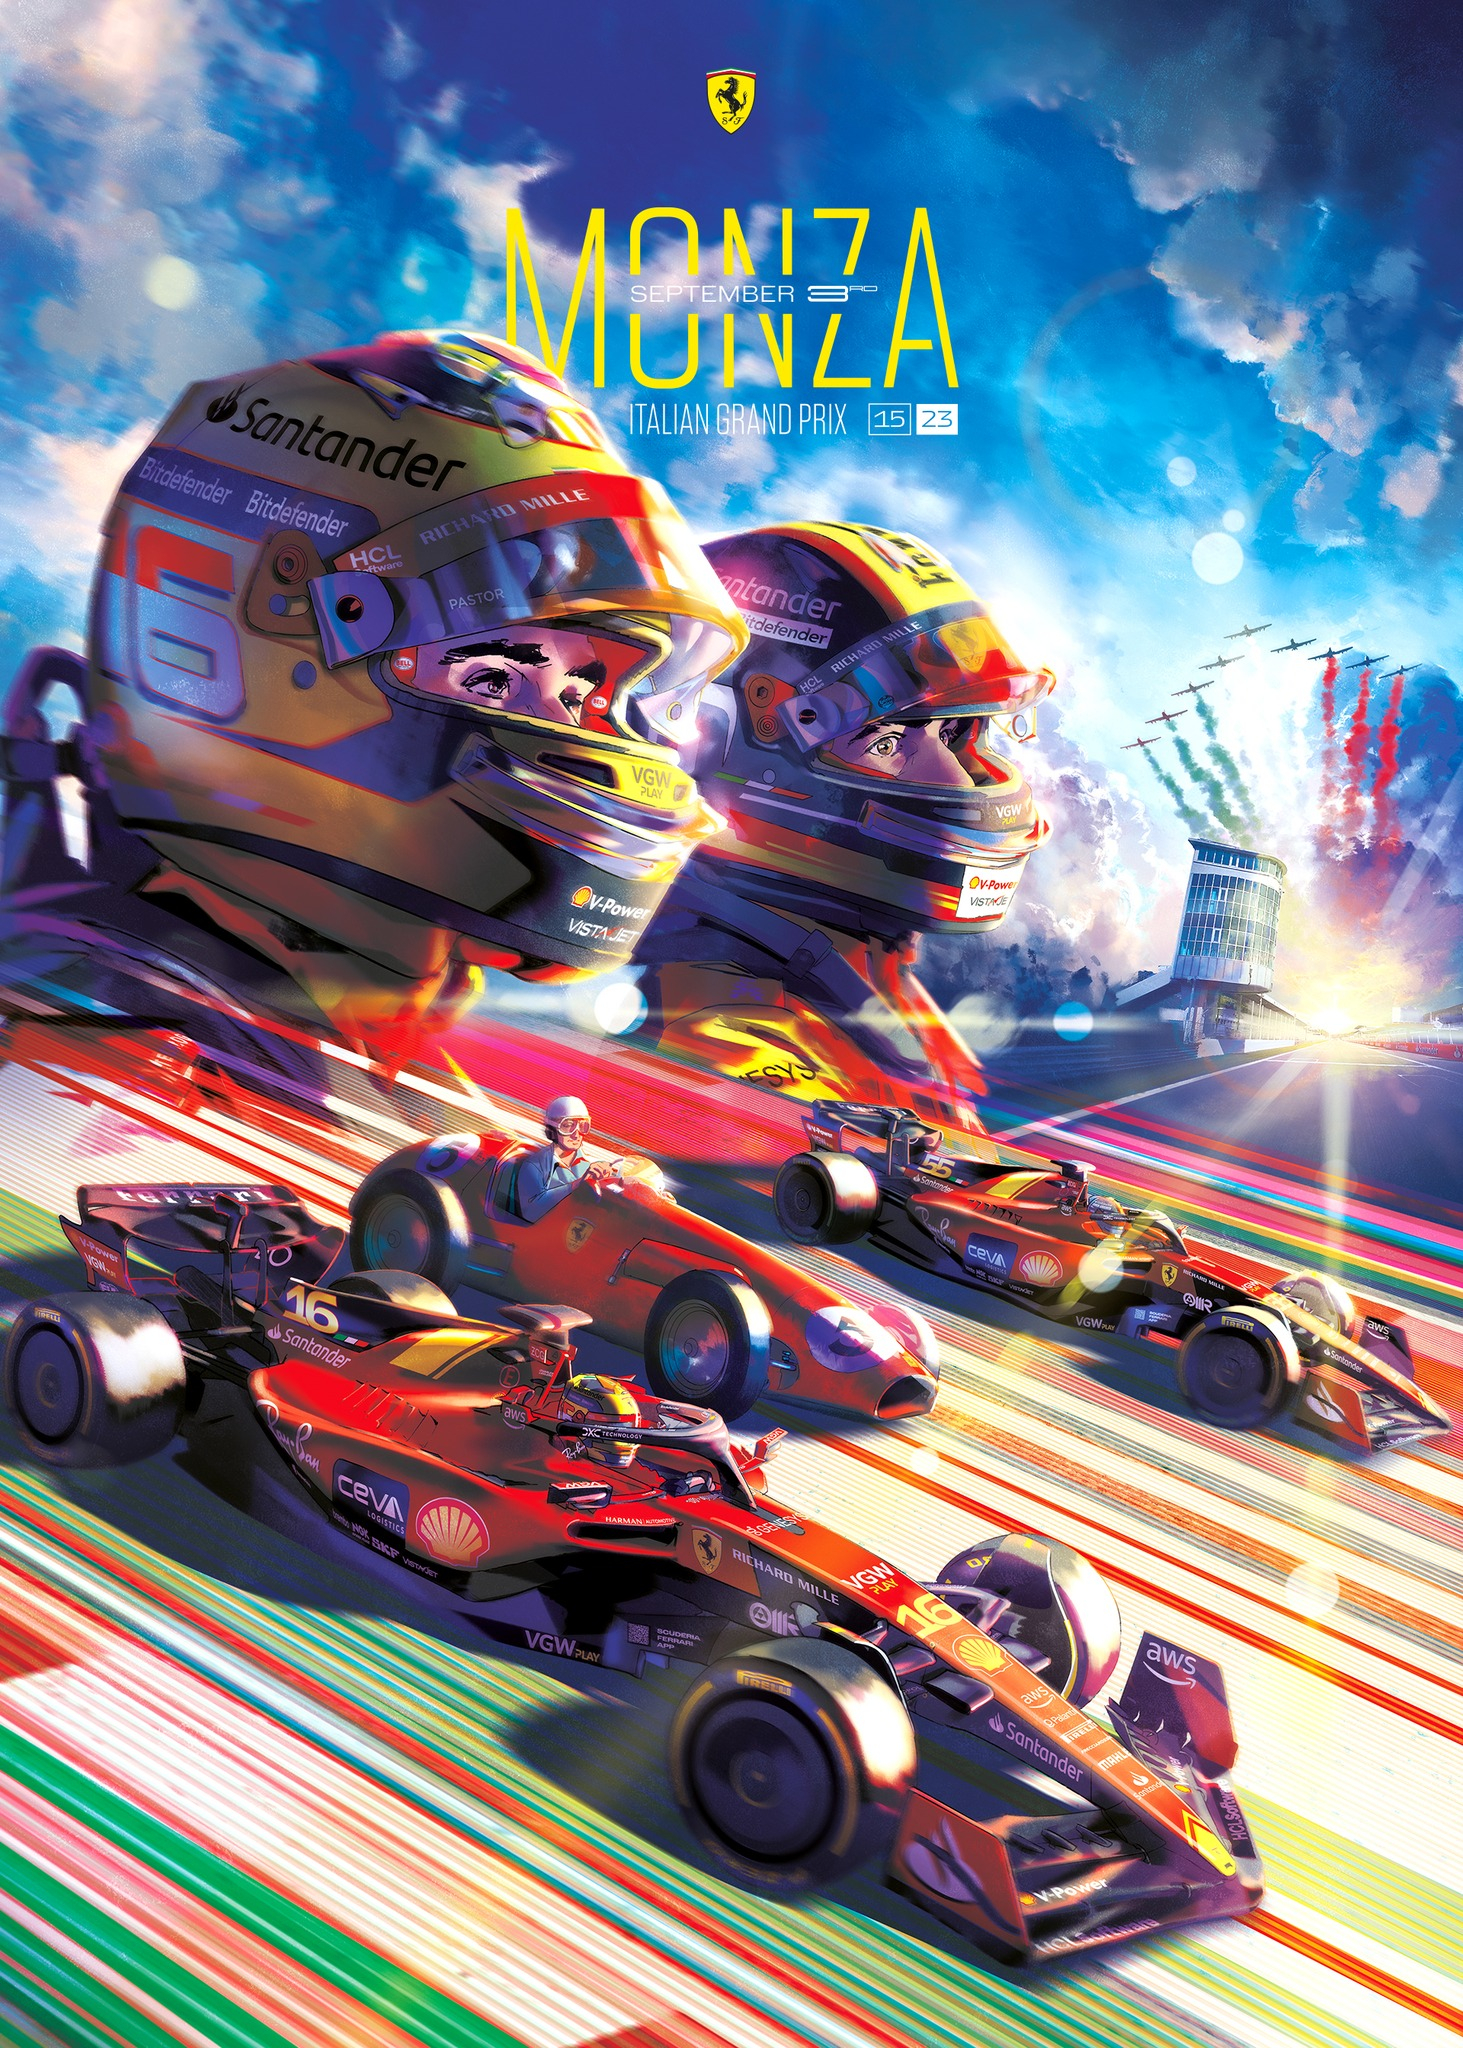 2023 Ferrari F1 RACE 15 Italy grand prix race cover art poster